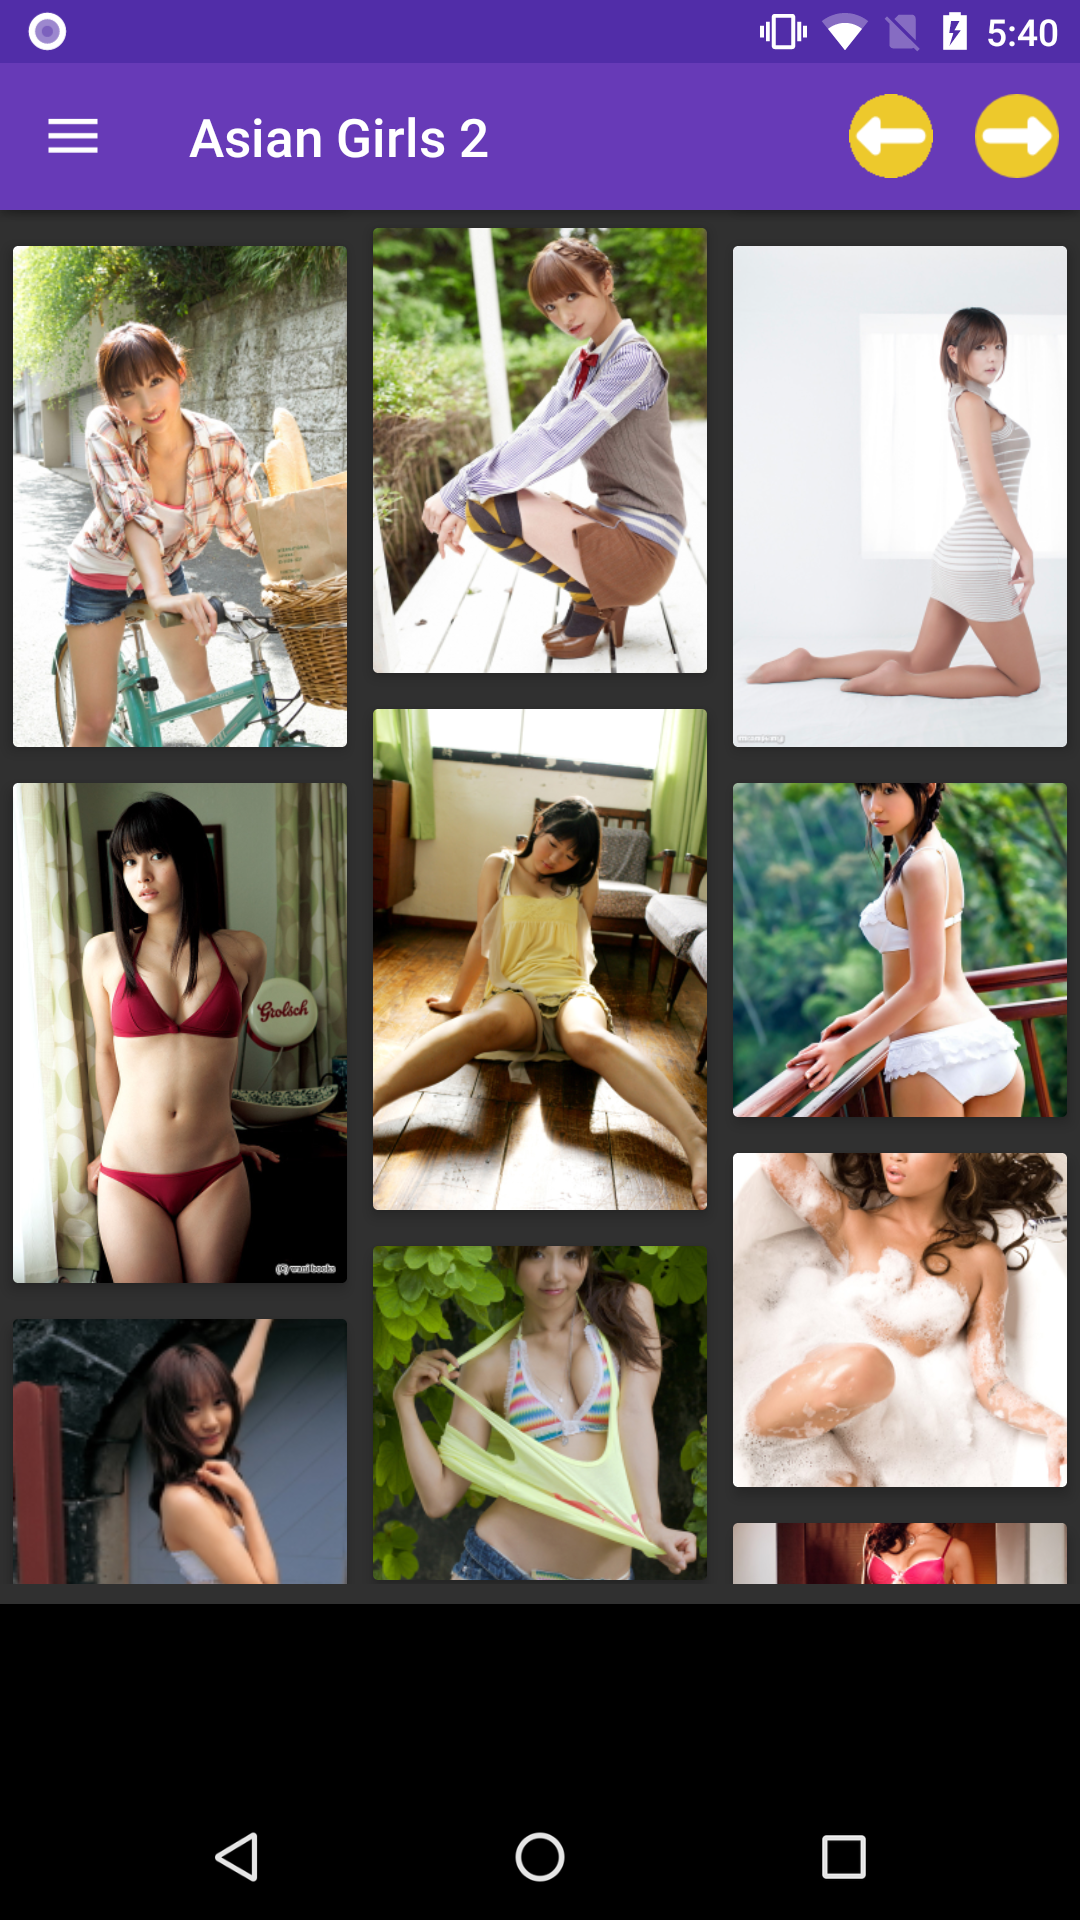 Sexy Asian Girls hentai,gallery,korean,manga,porn,apps,photos,pegging,comic,picture,download,best,japan,china,girls,sexy,asian,apk,free,app,amateur,pornstars